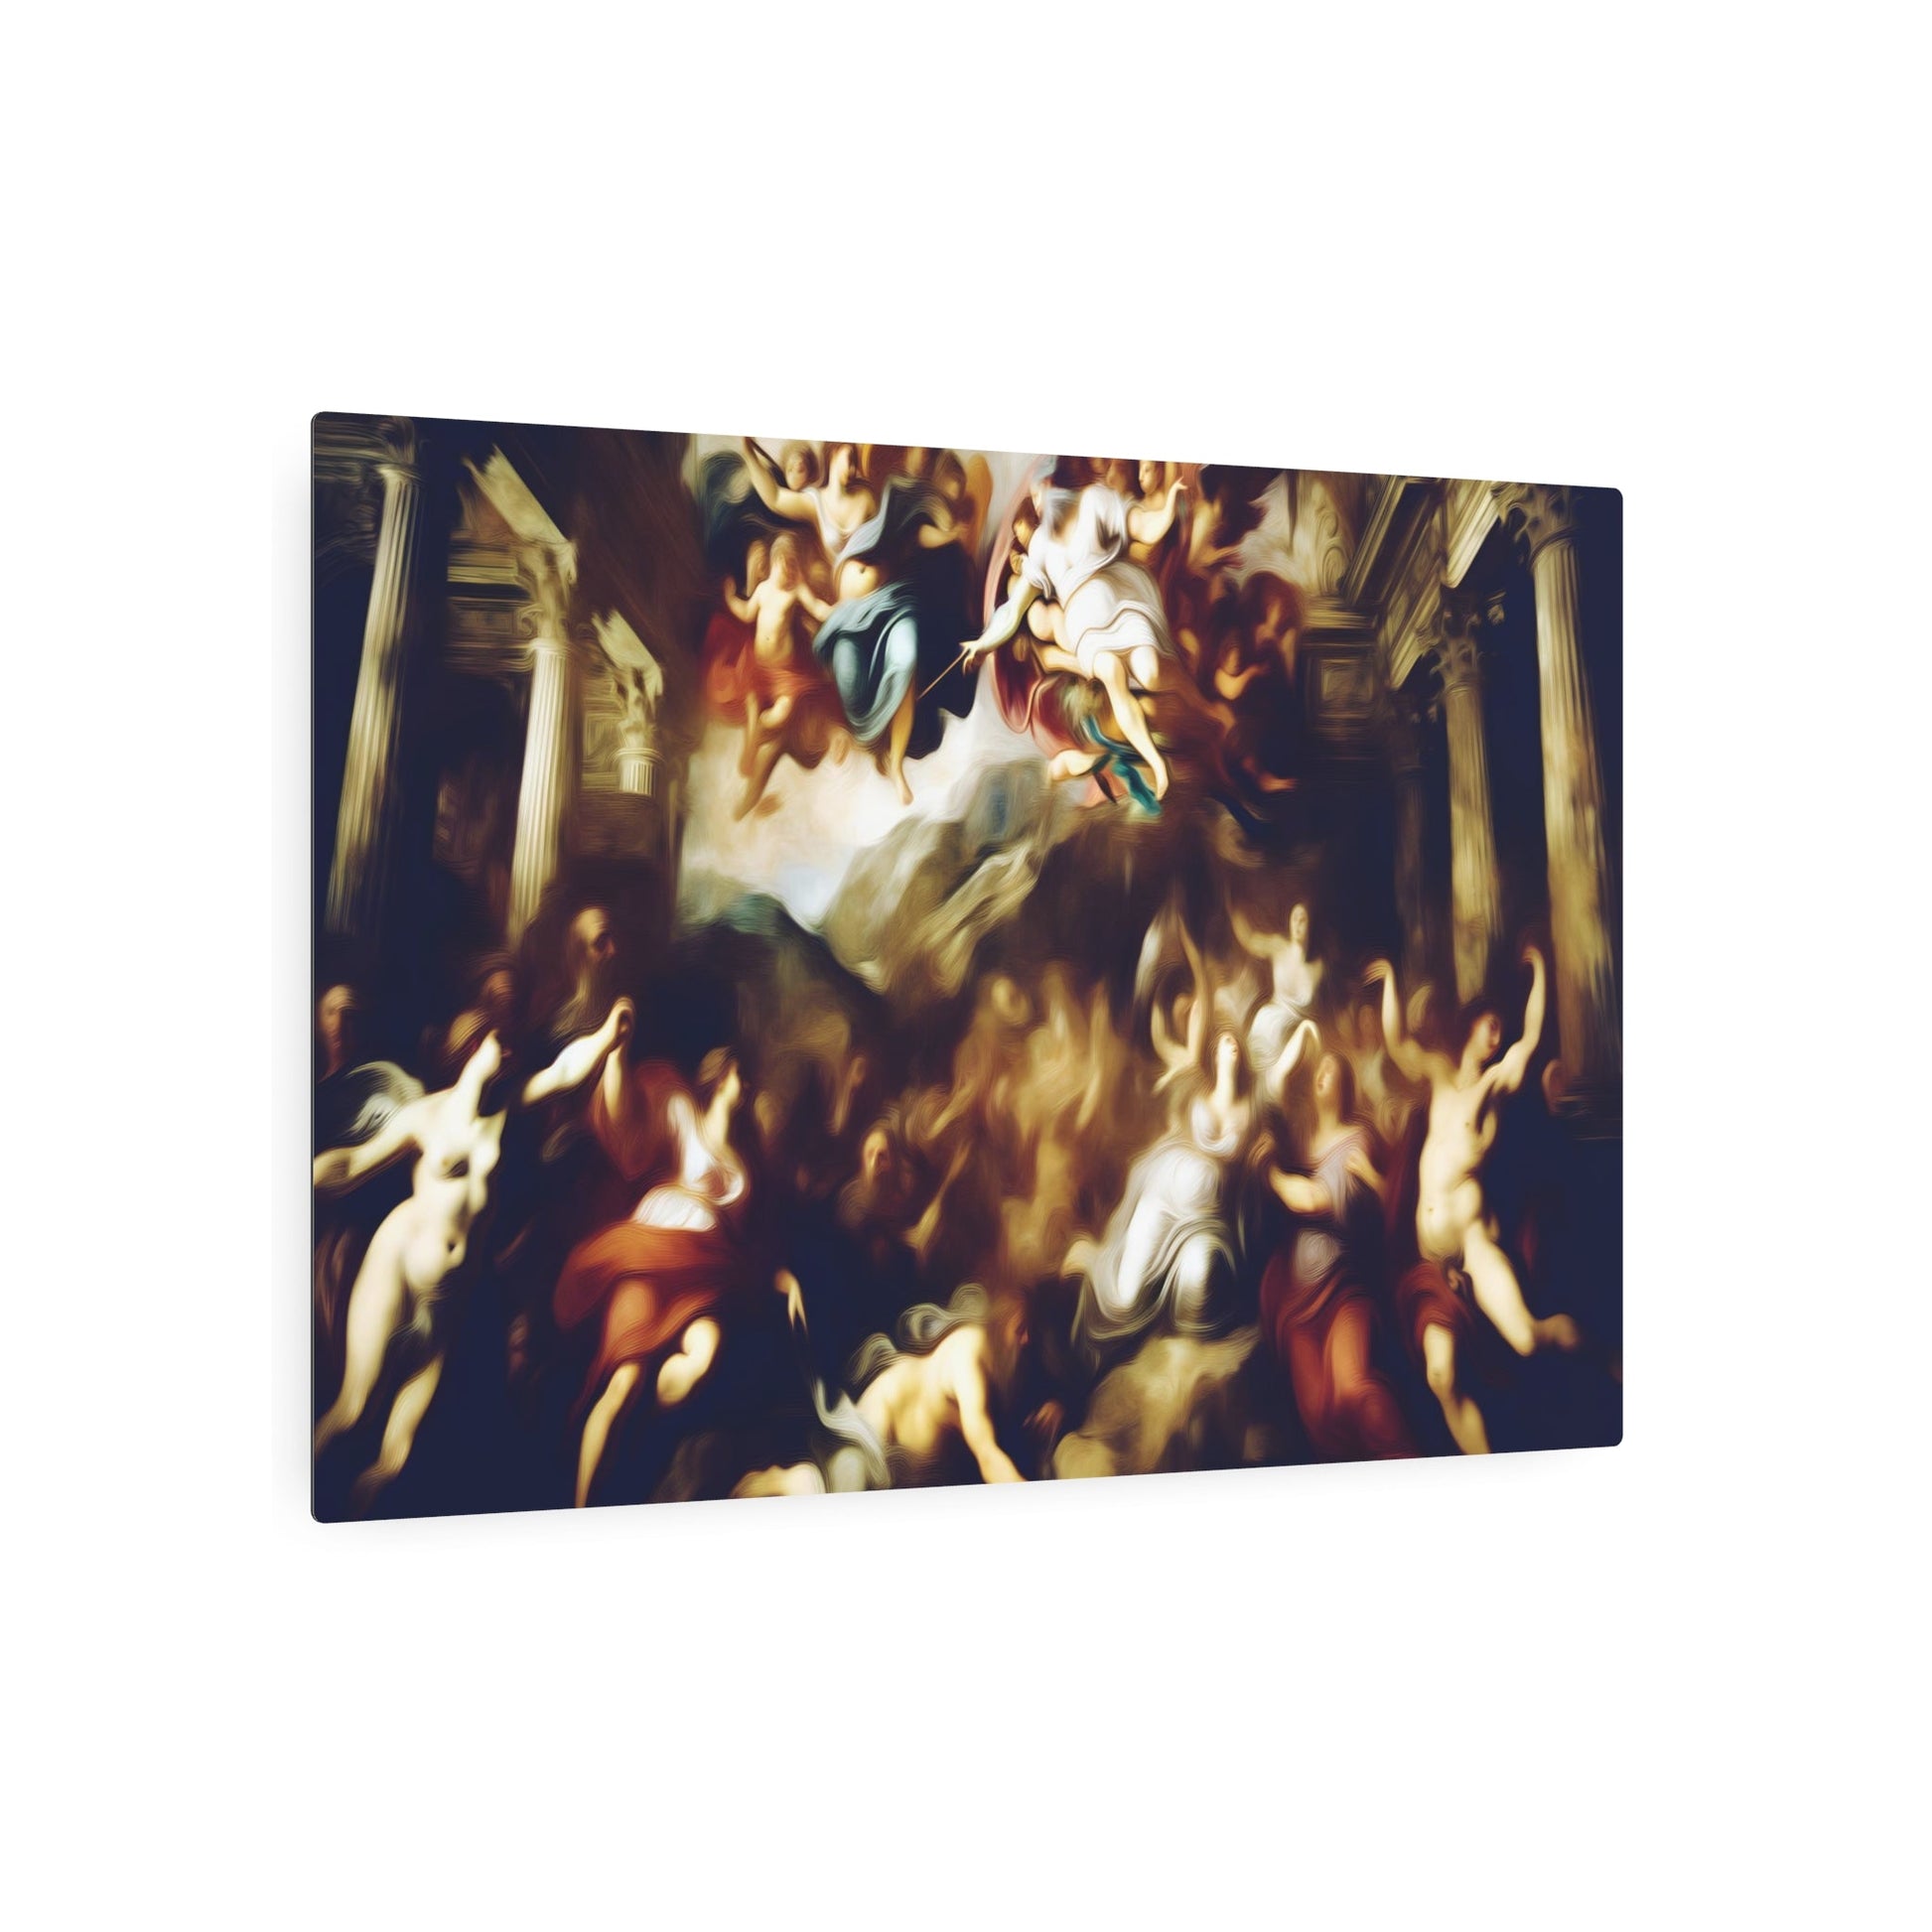 Metal Poster Art | "Grandeur of Baroque: Dramatic Essence Western Art Style Masterpiece" - Metal Poster Art 36″ x 24″ (Horizontal) 0.12''